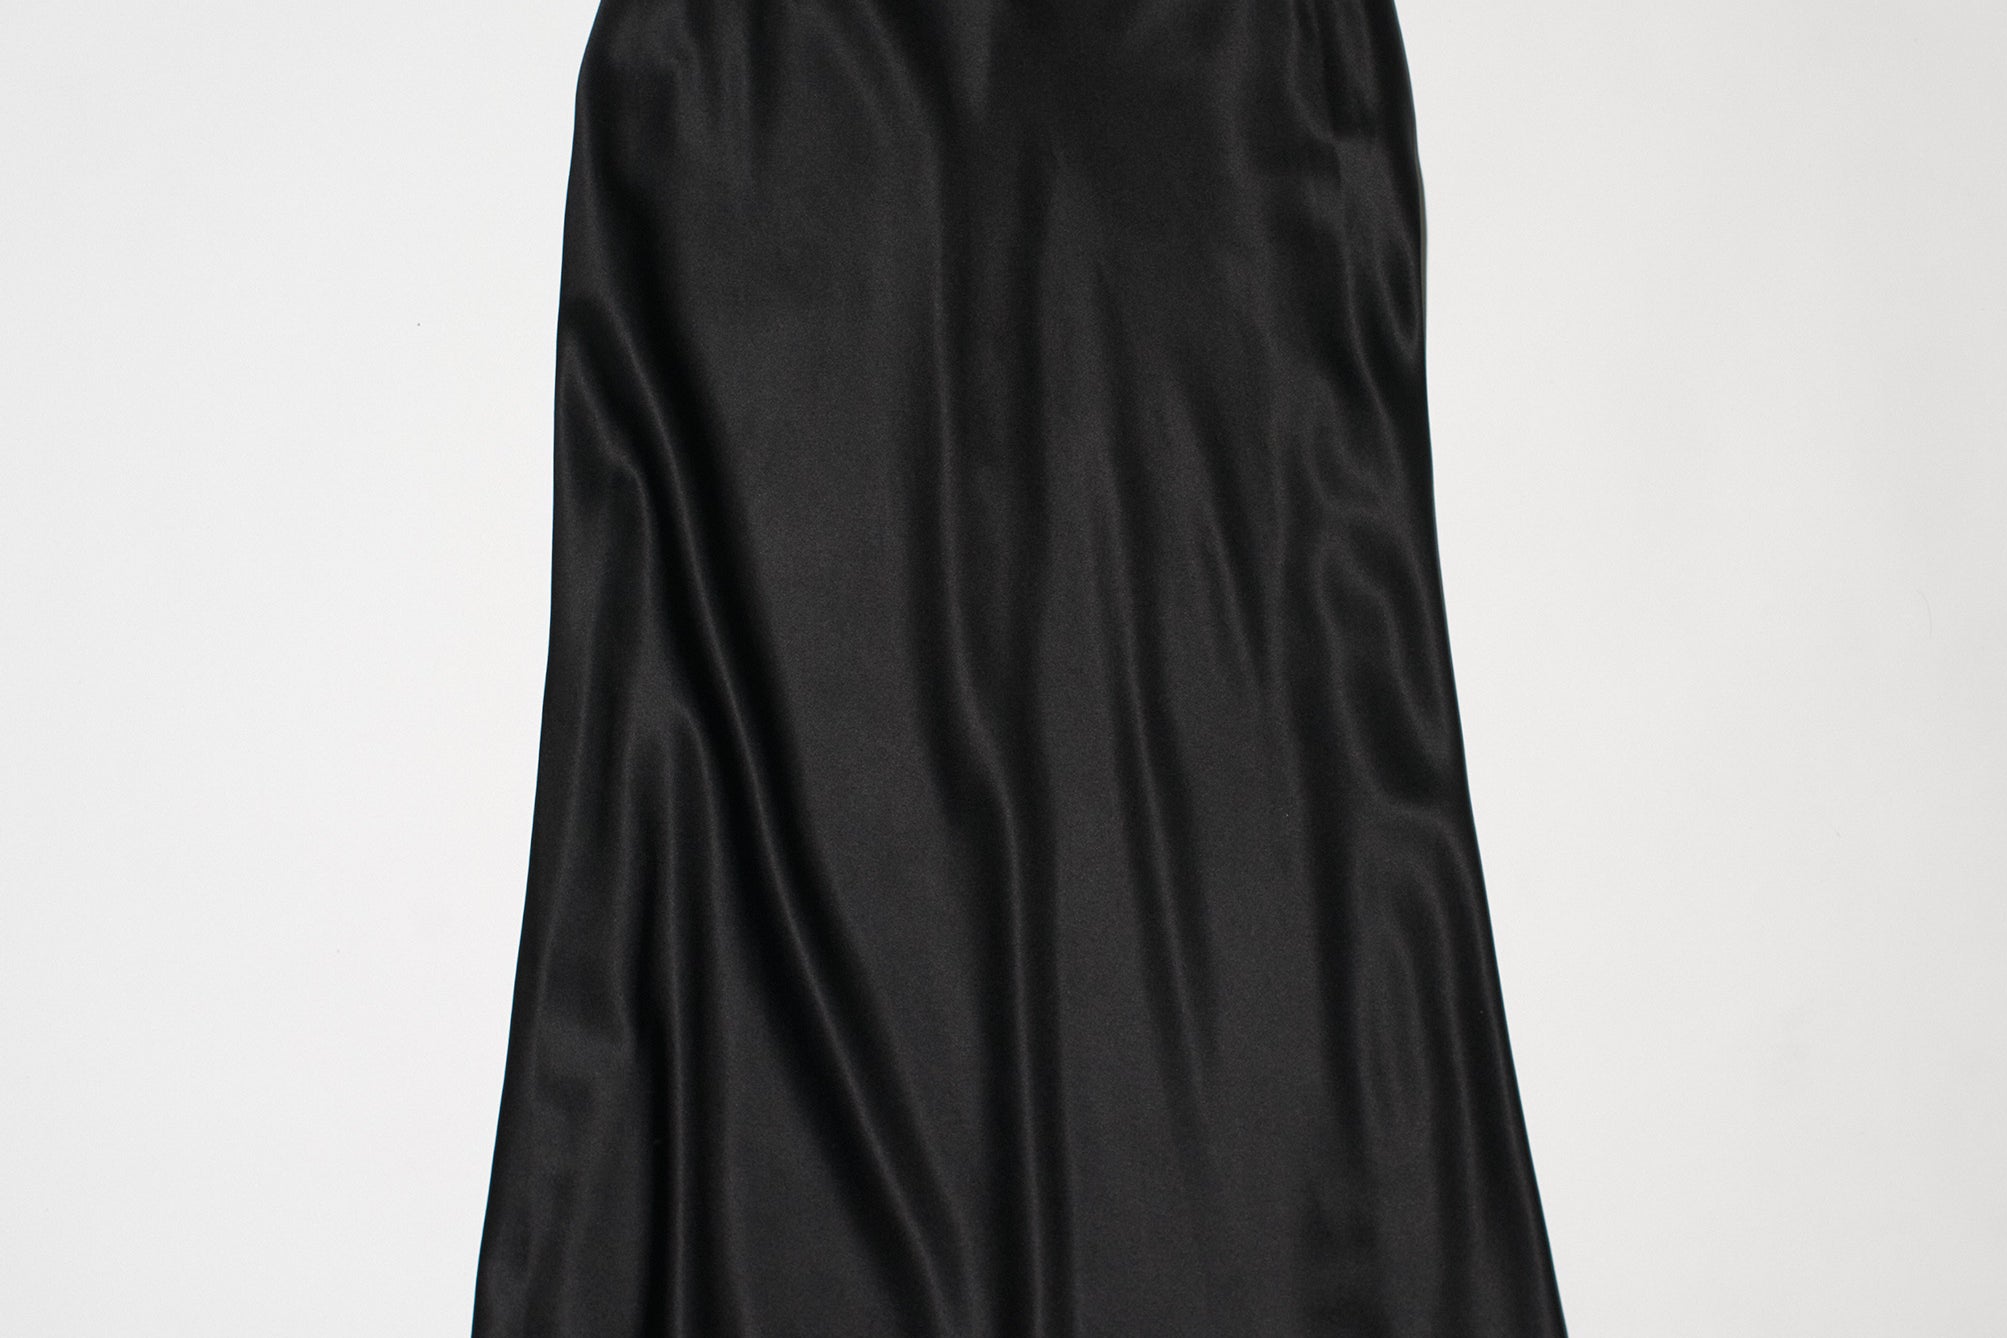 Careste Georgia Skirt in black flat view